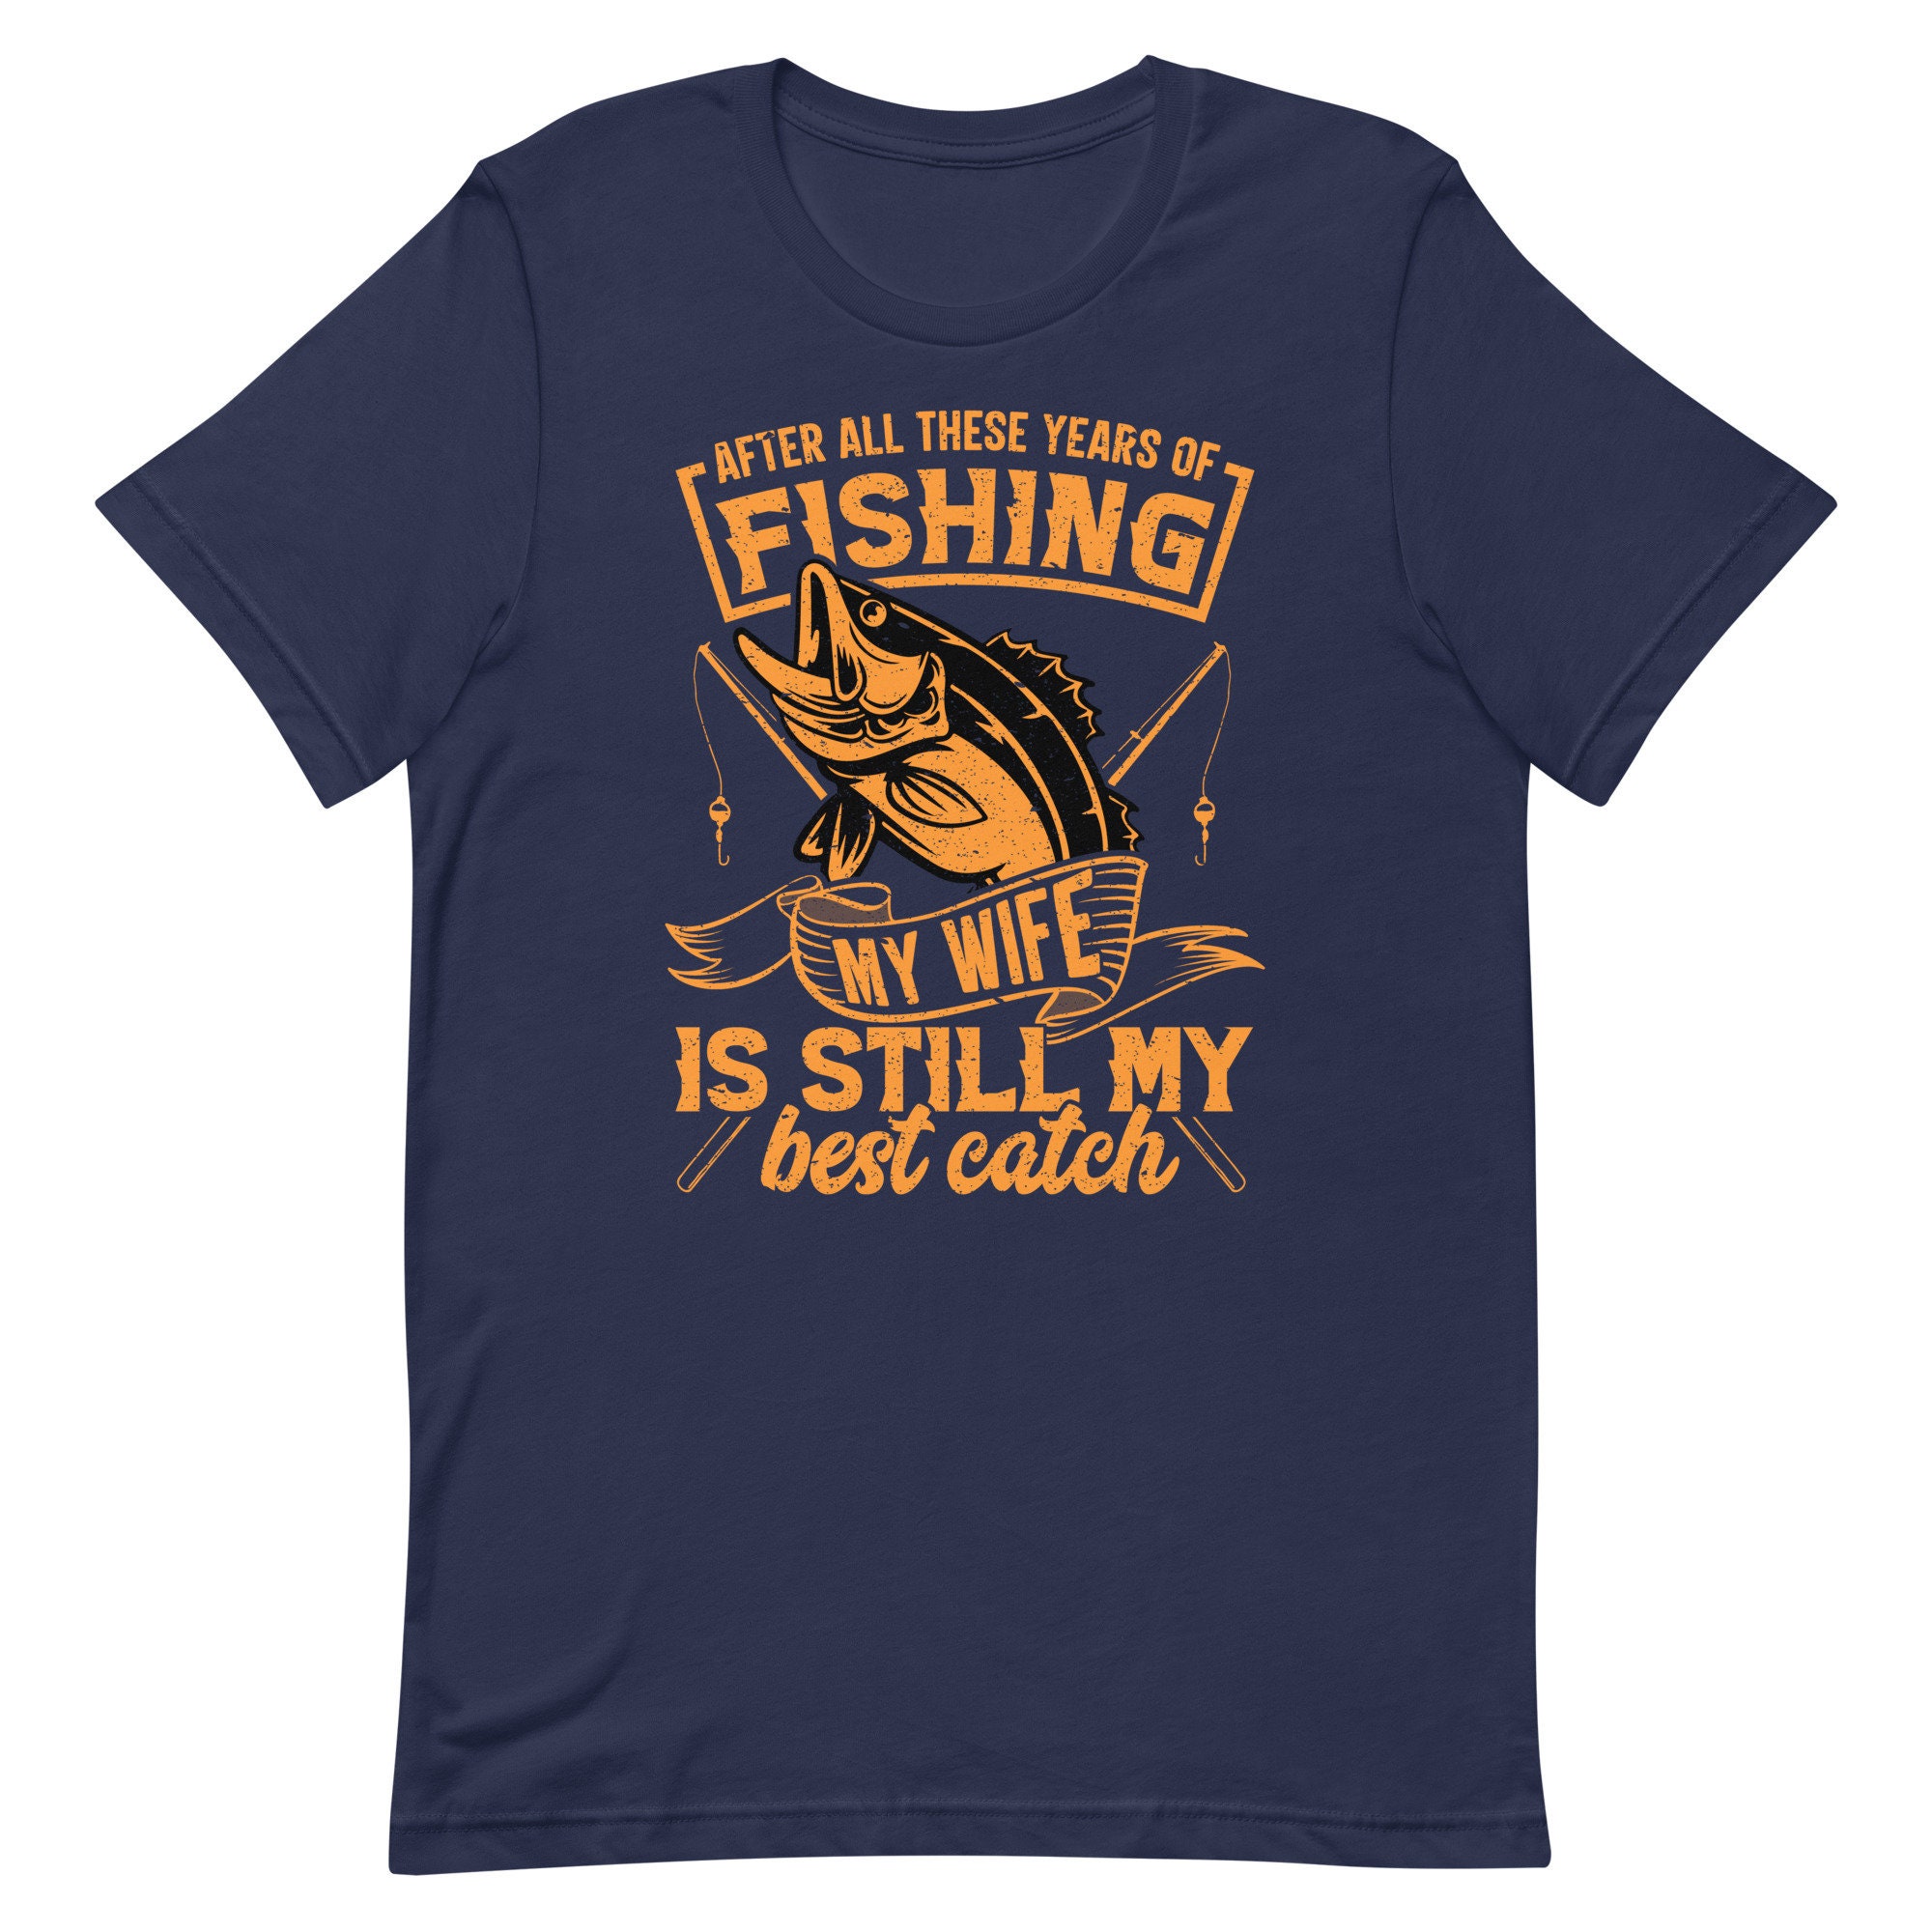 Funny Fishing T Shirt, Fisherman Shirt, Bass Fishing Shirt, Fish Lover Gift, Husband Fishing Gifts for Men, Fishing Dad Vacation Shirt.